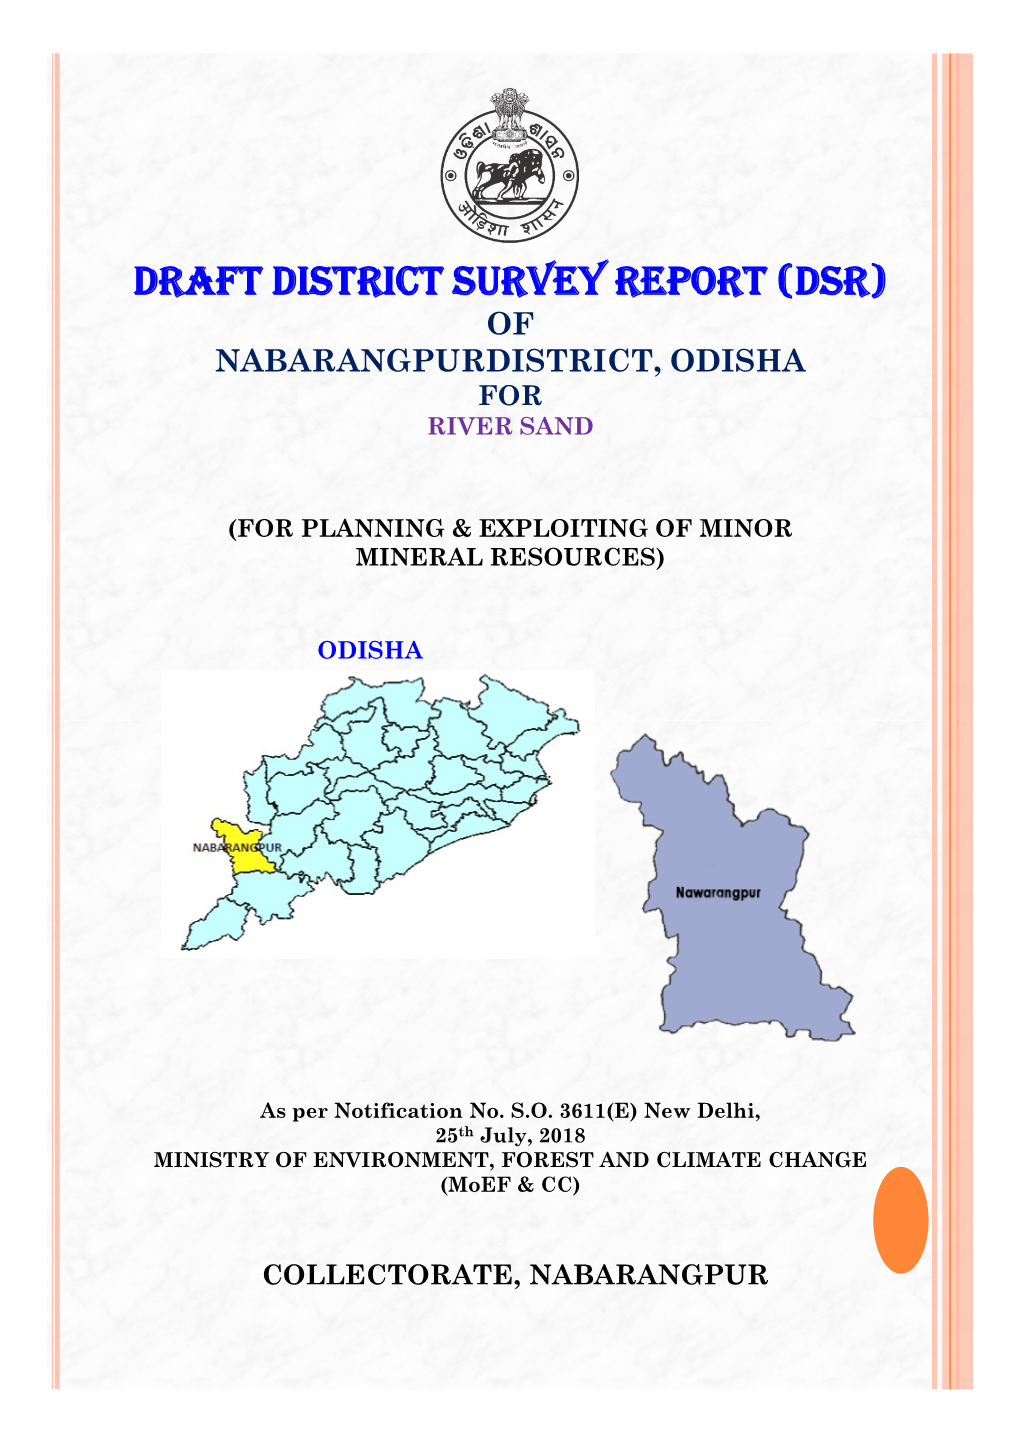 Draft District Survey Report (Dsr) of Nabarangpurdistrict, Odisha for River Sand